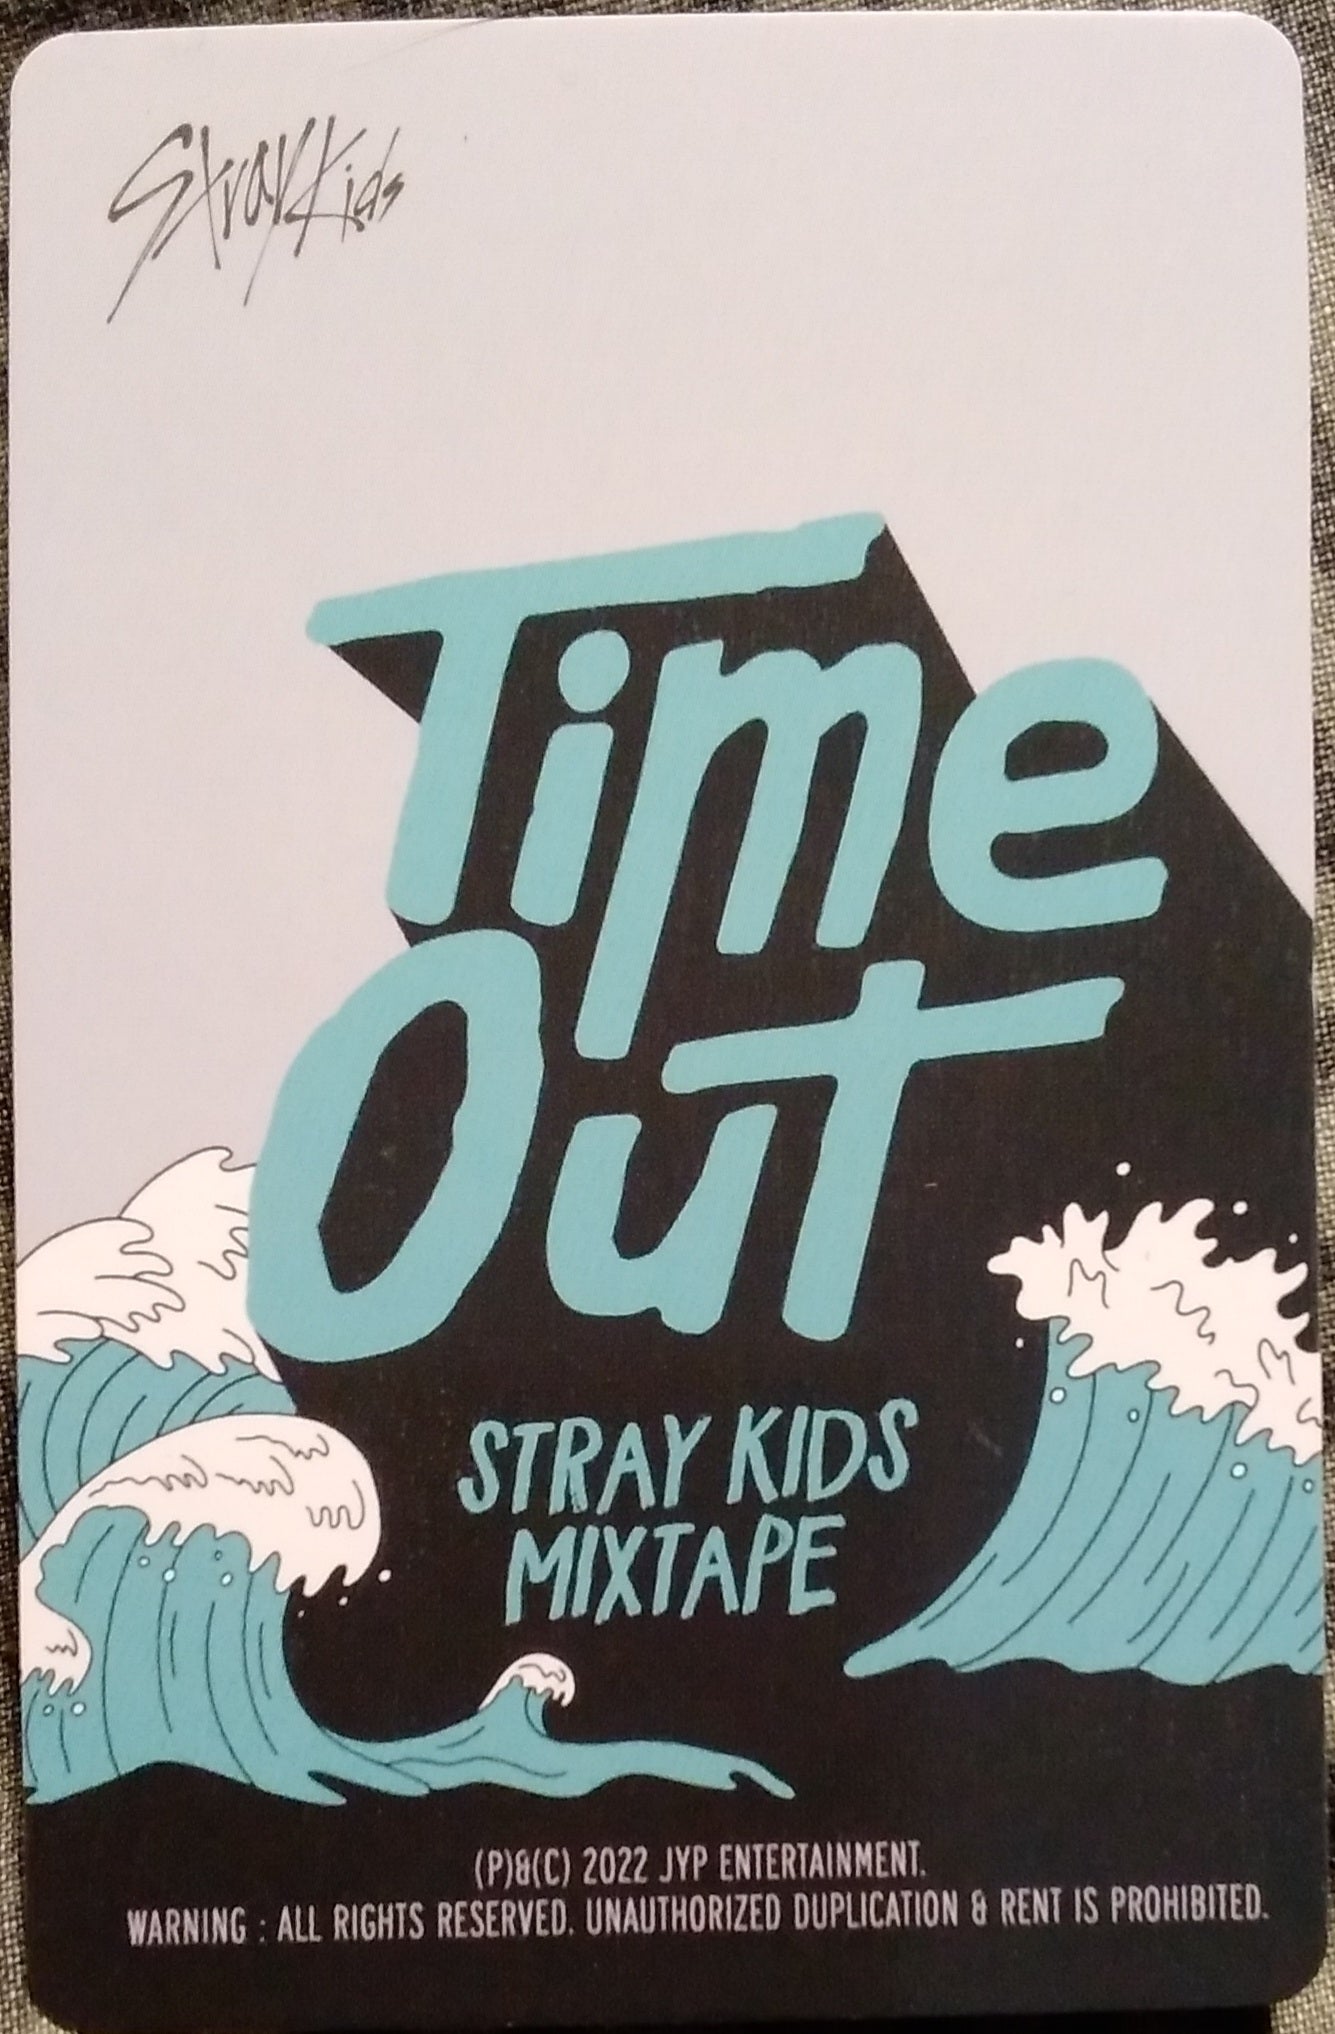 Photocard  STRAYKIDS  Time out  mixtape  Lee felix